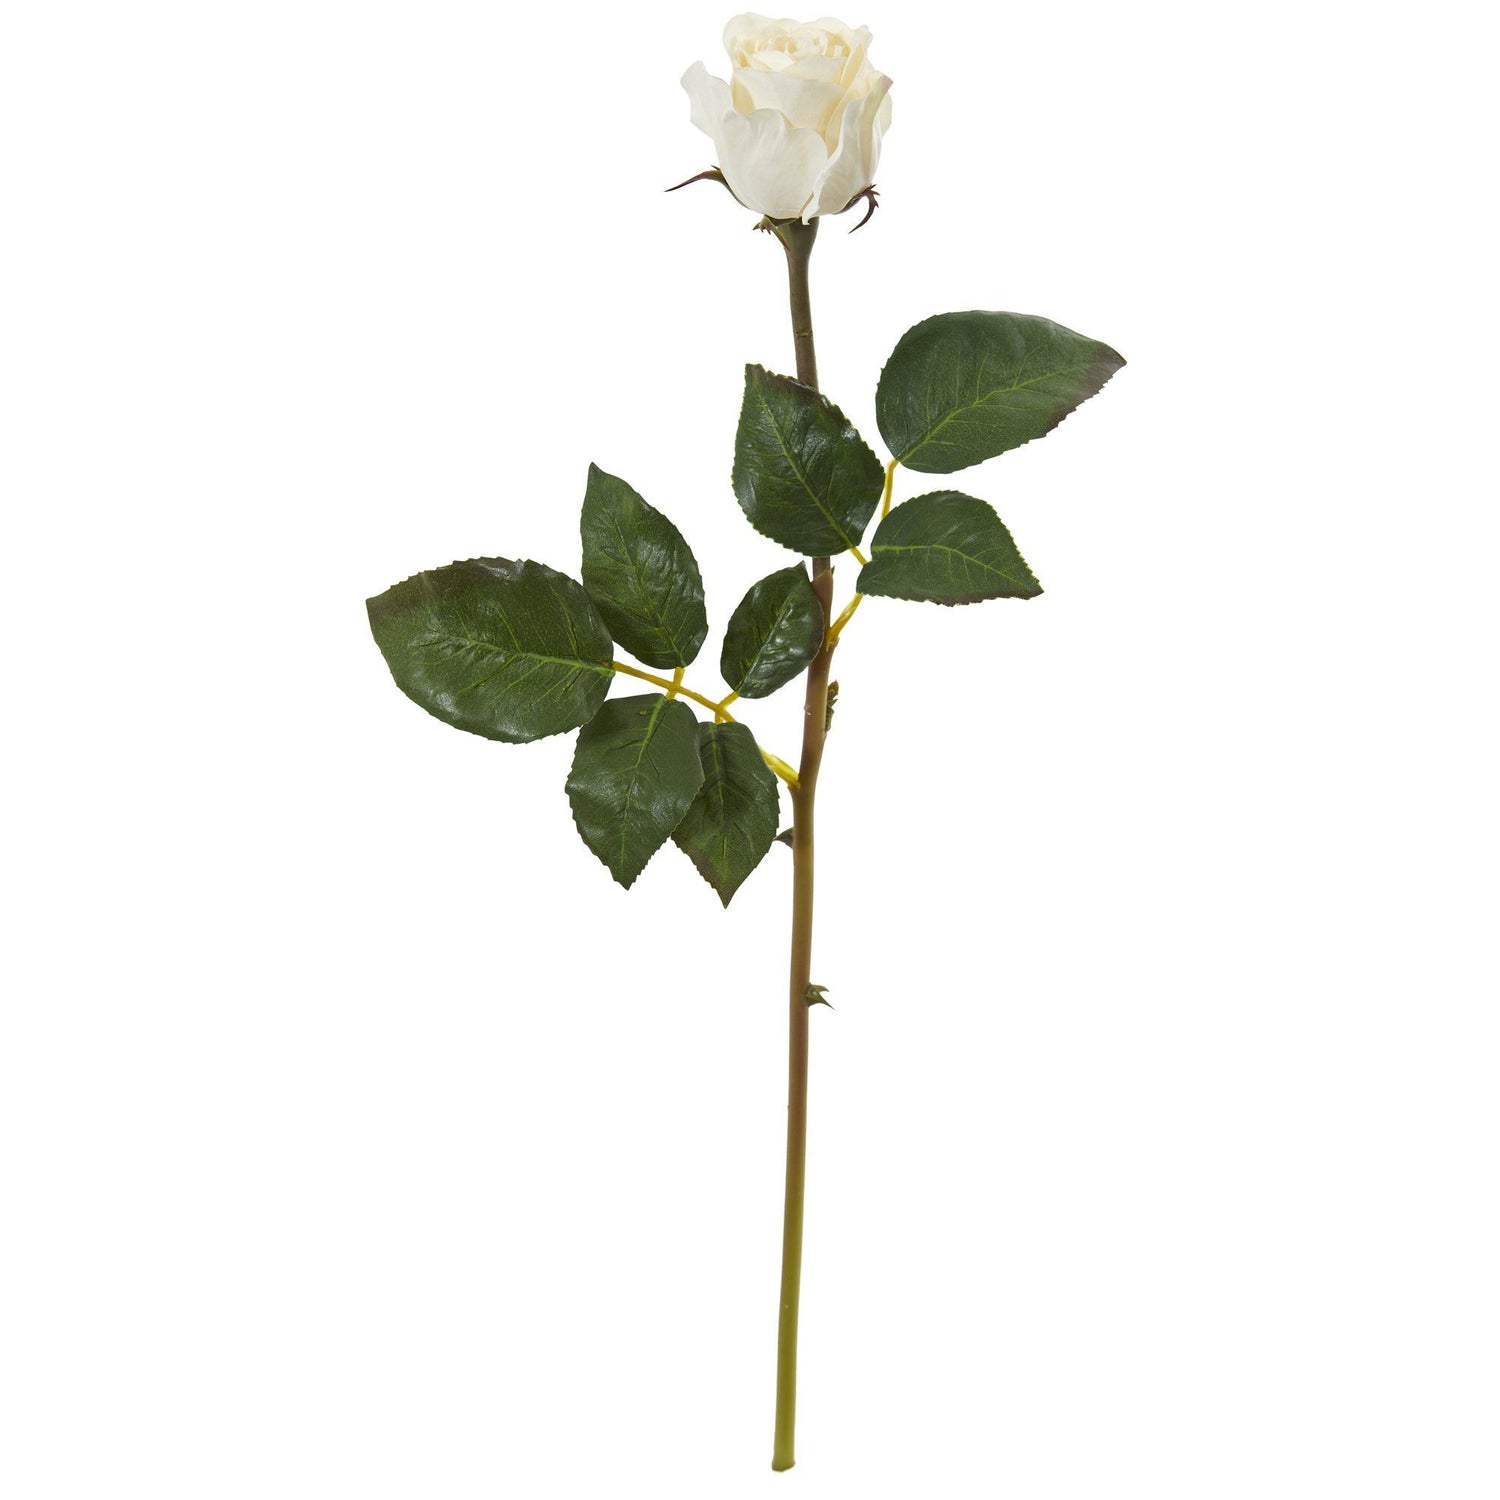 20” Rose Bud Artificial Flower (Set of 12)